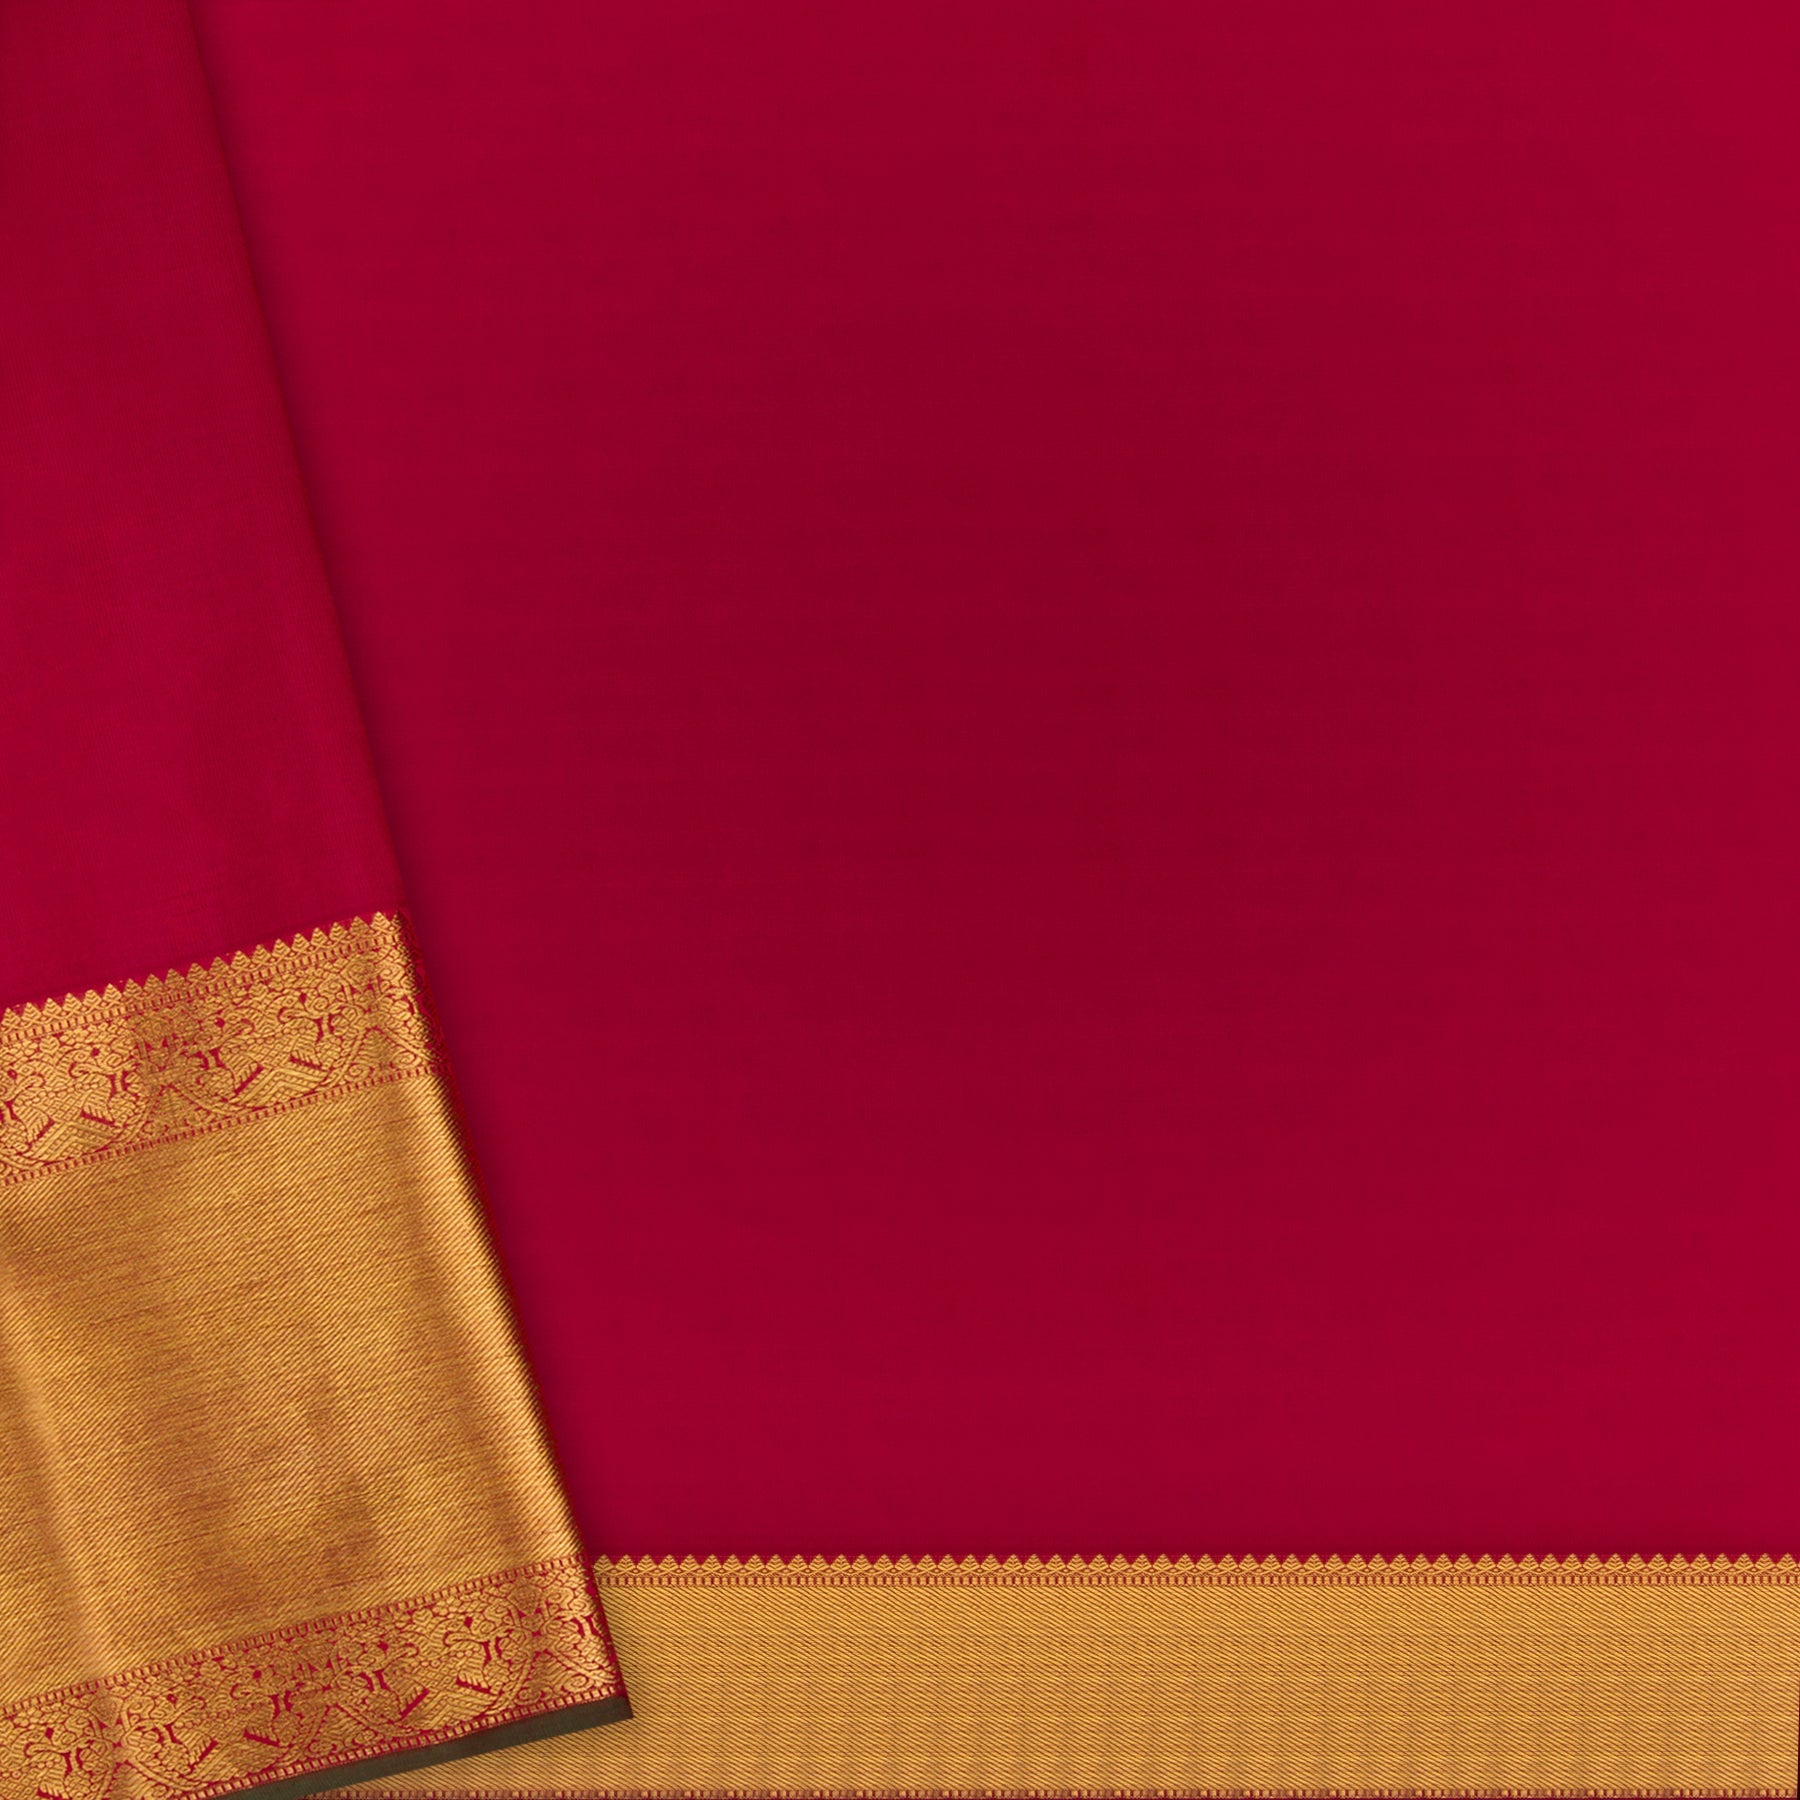 Kanakavalli Kanjivaram Silk Sari 23-110-HS001-03020 - Blouse View